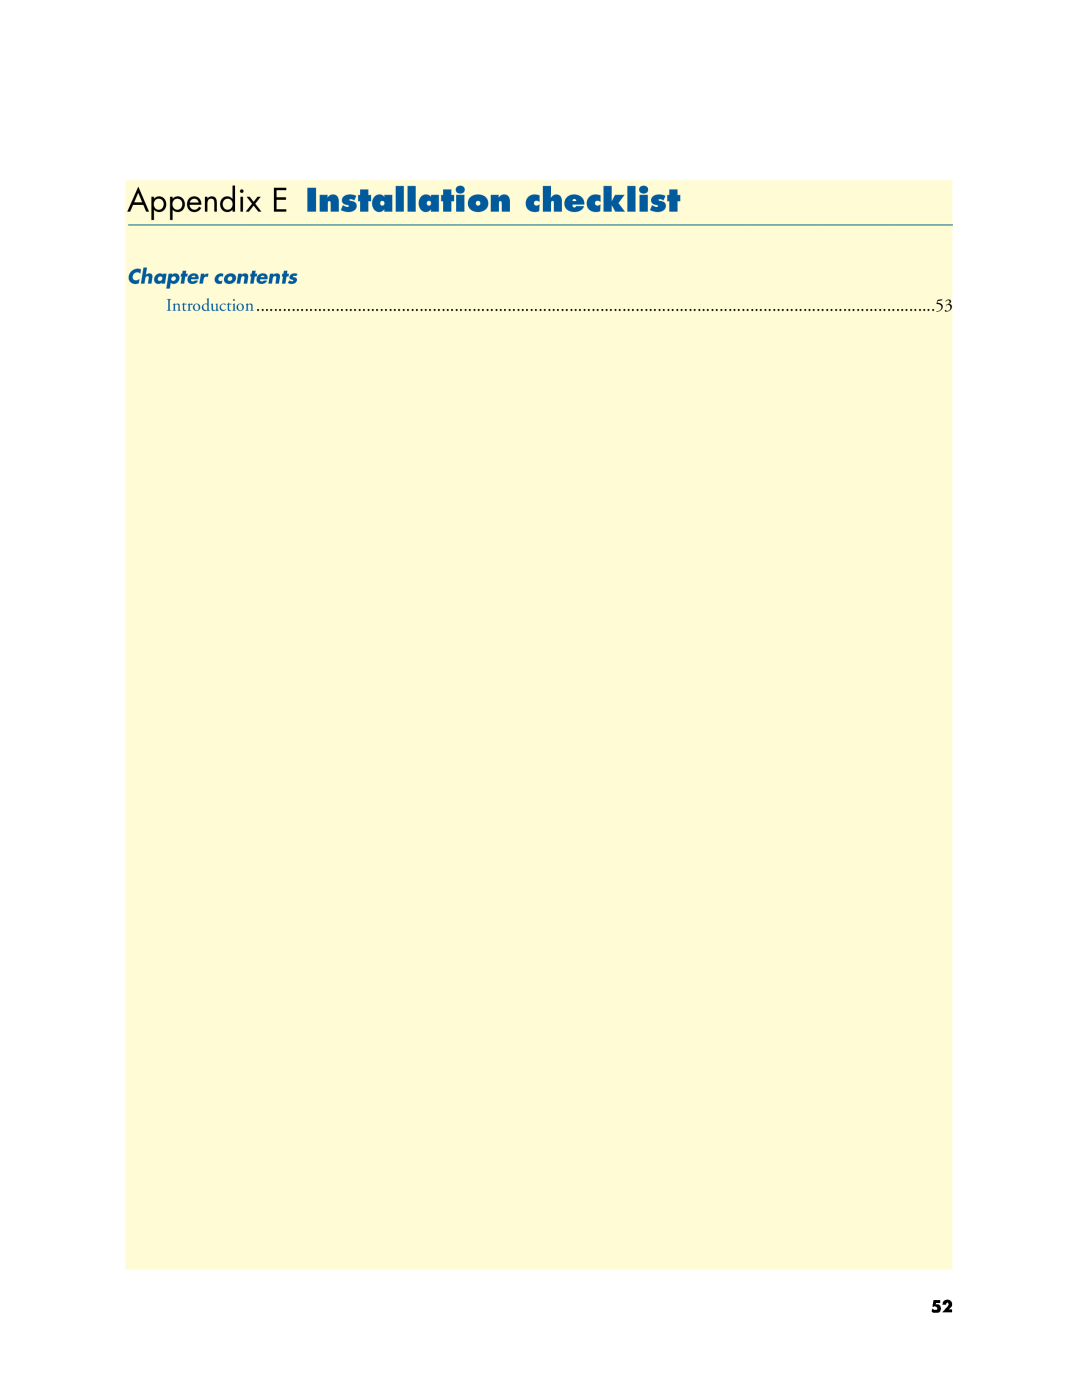 Patton electronic 2294, 2292 manual Appendix E Installation checklist, Chapter contents 